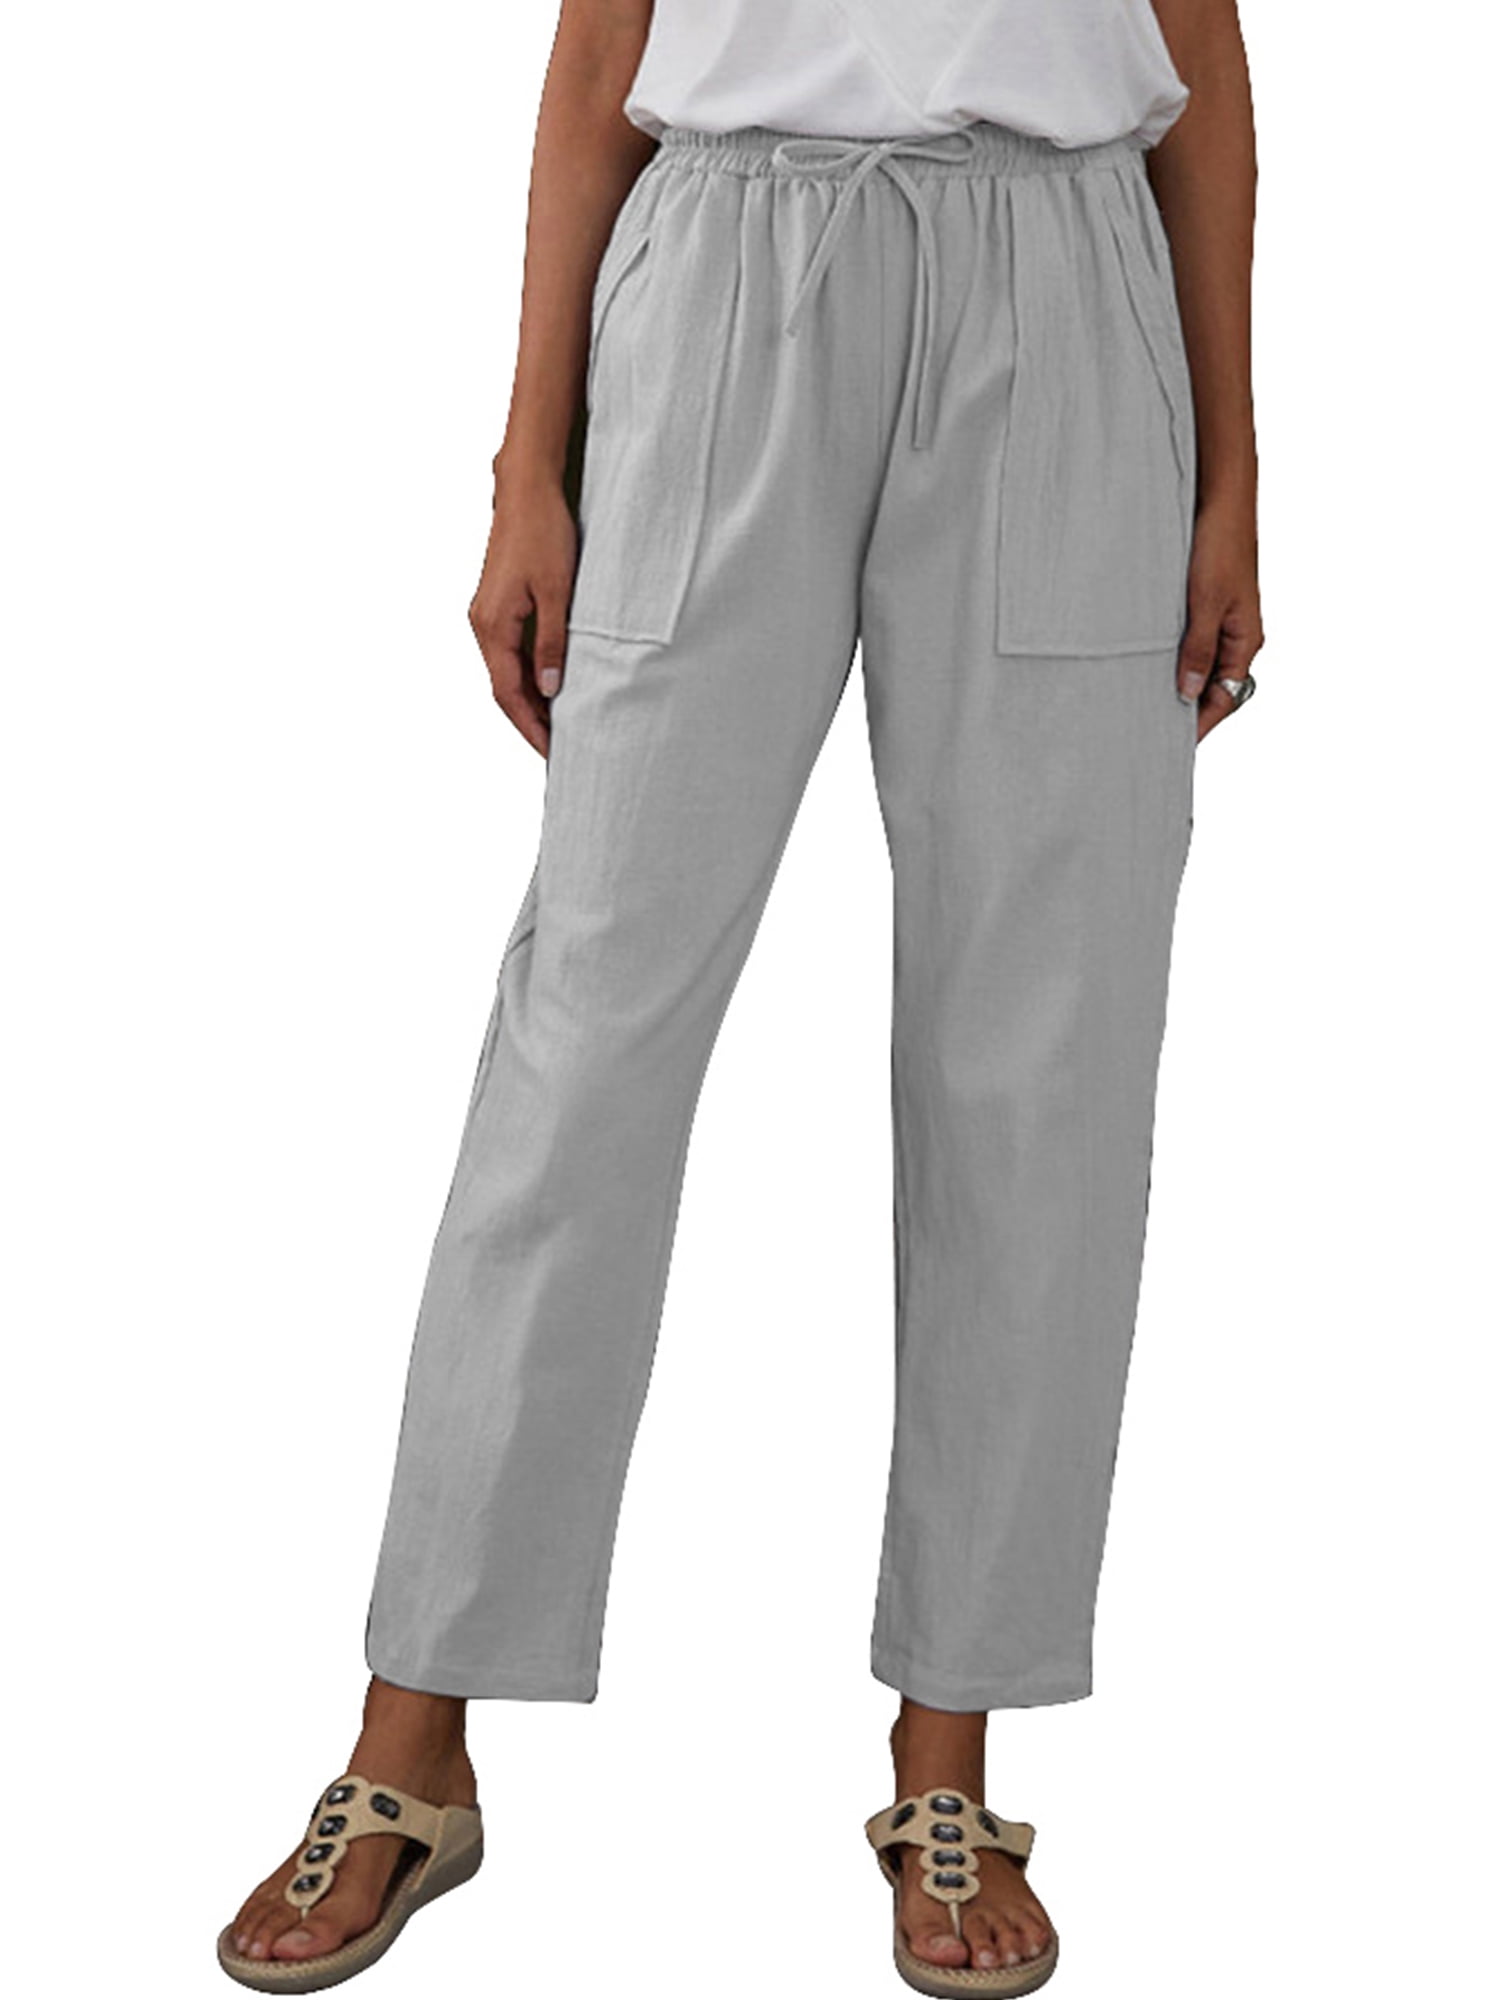 ZNU Women's Cotton And Linen Fashion Solid Color Thin Trousers Slacks ...